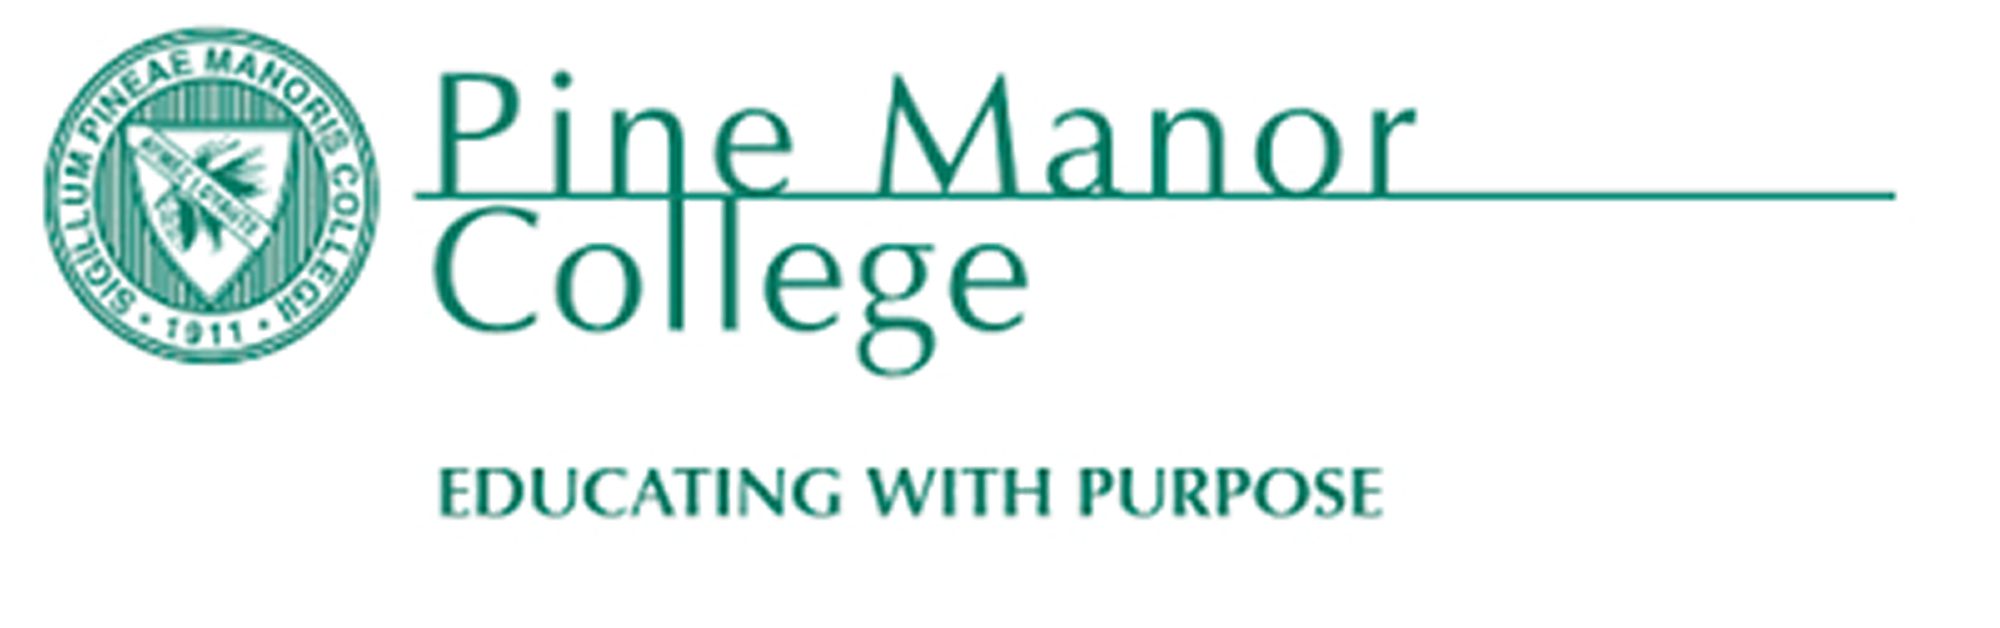 image of pine manor college logo